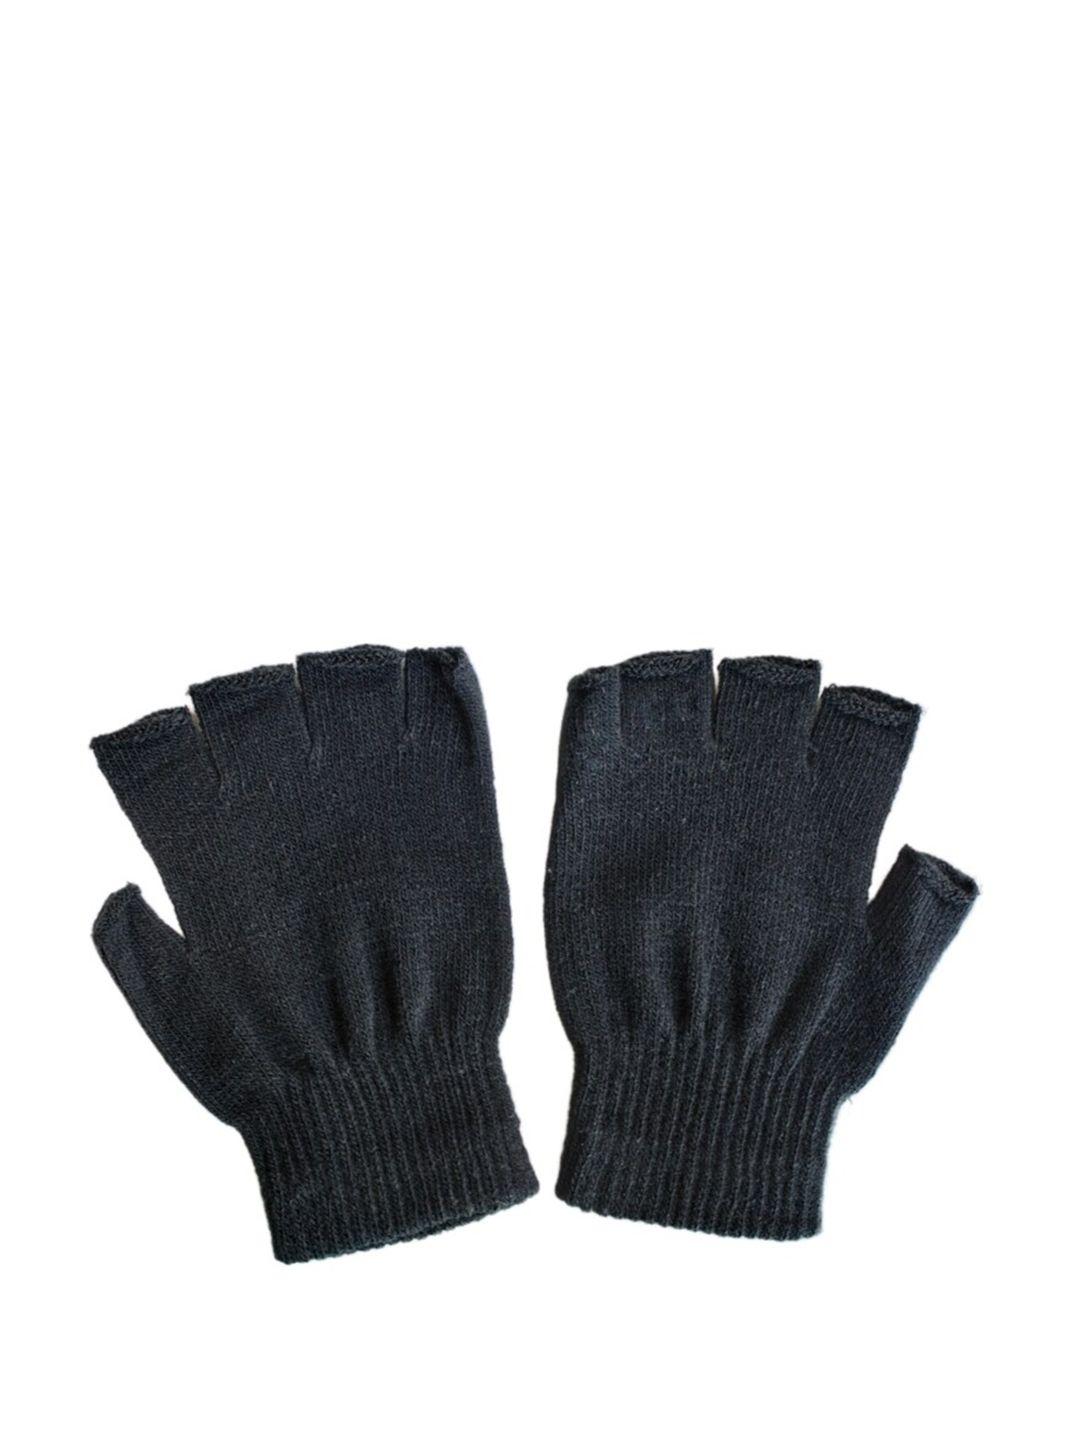 TIPY TIPY TAP Girls Half Finger Acrylic Winter Gloves